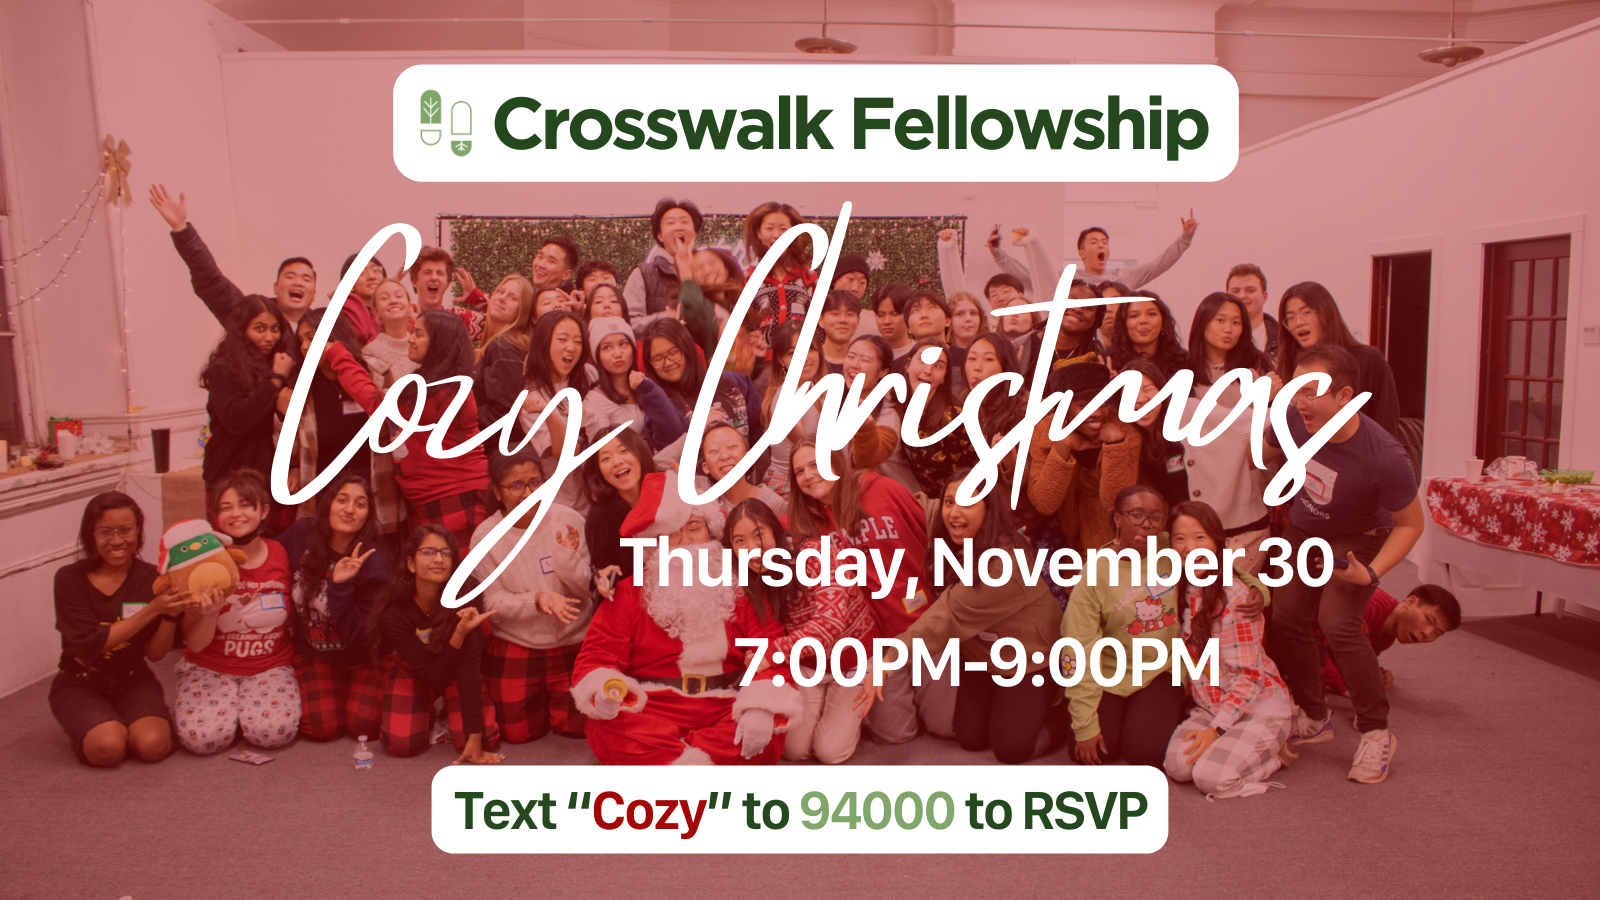 Crosswalk Fellowship's "Cozy Christmas"